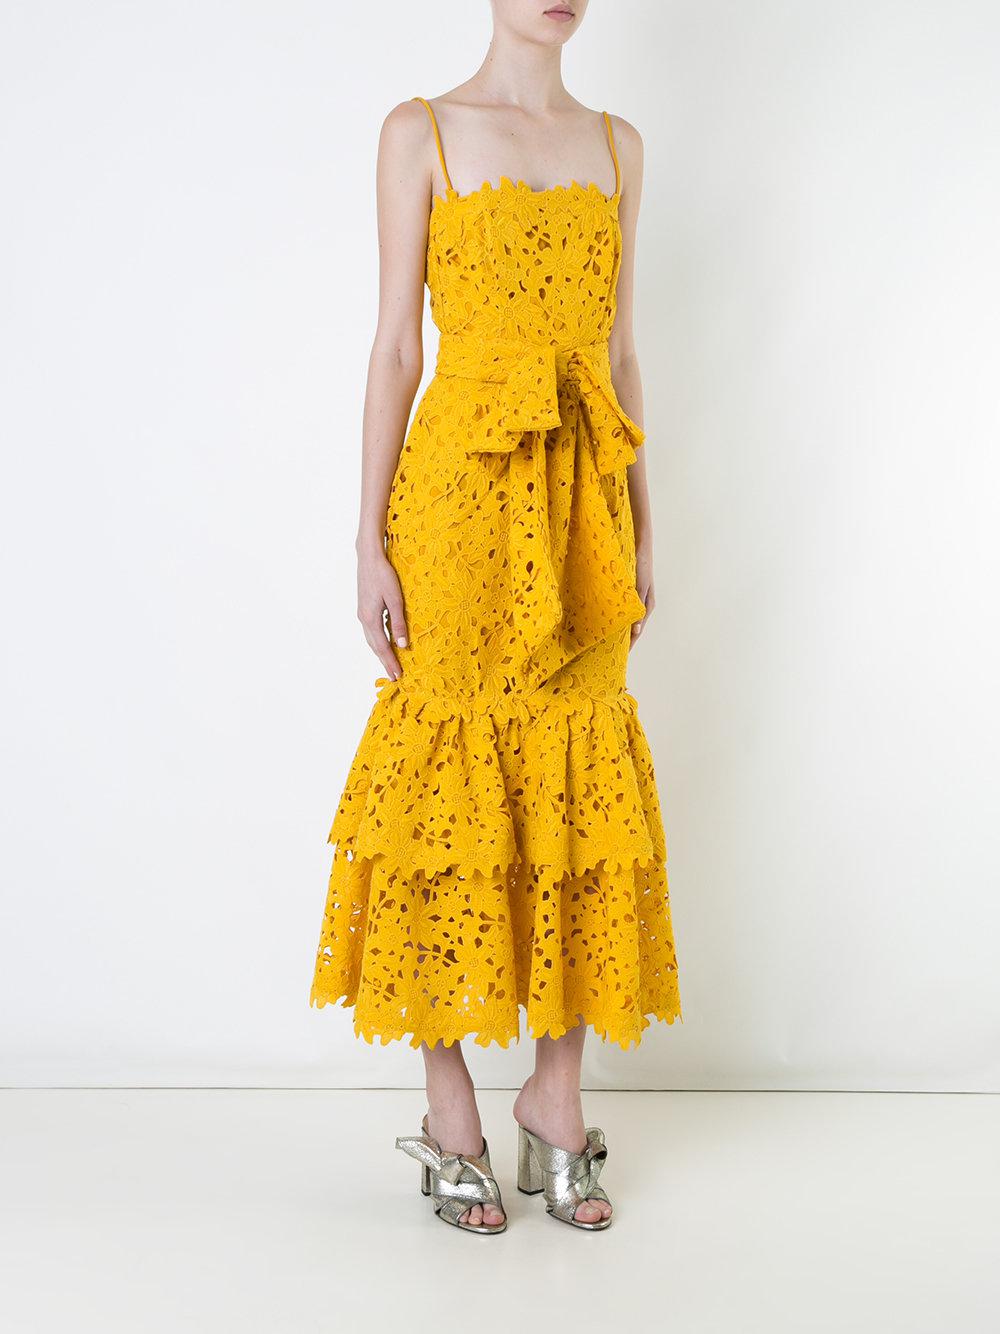 Bambah Lace Double Ruffle Dress in Yellow/Orange (Yellow) - Lyst